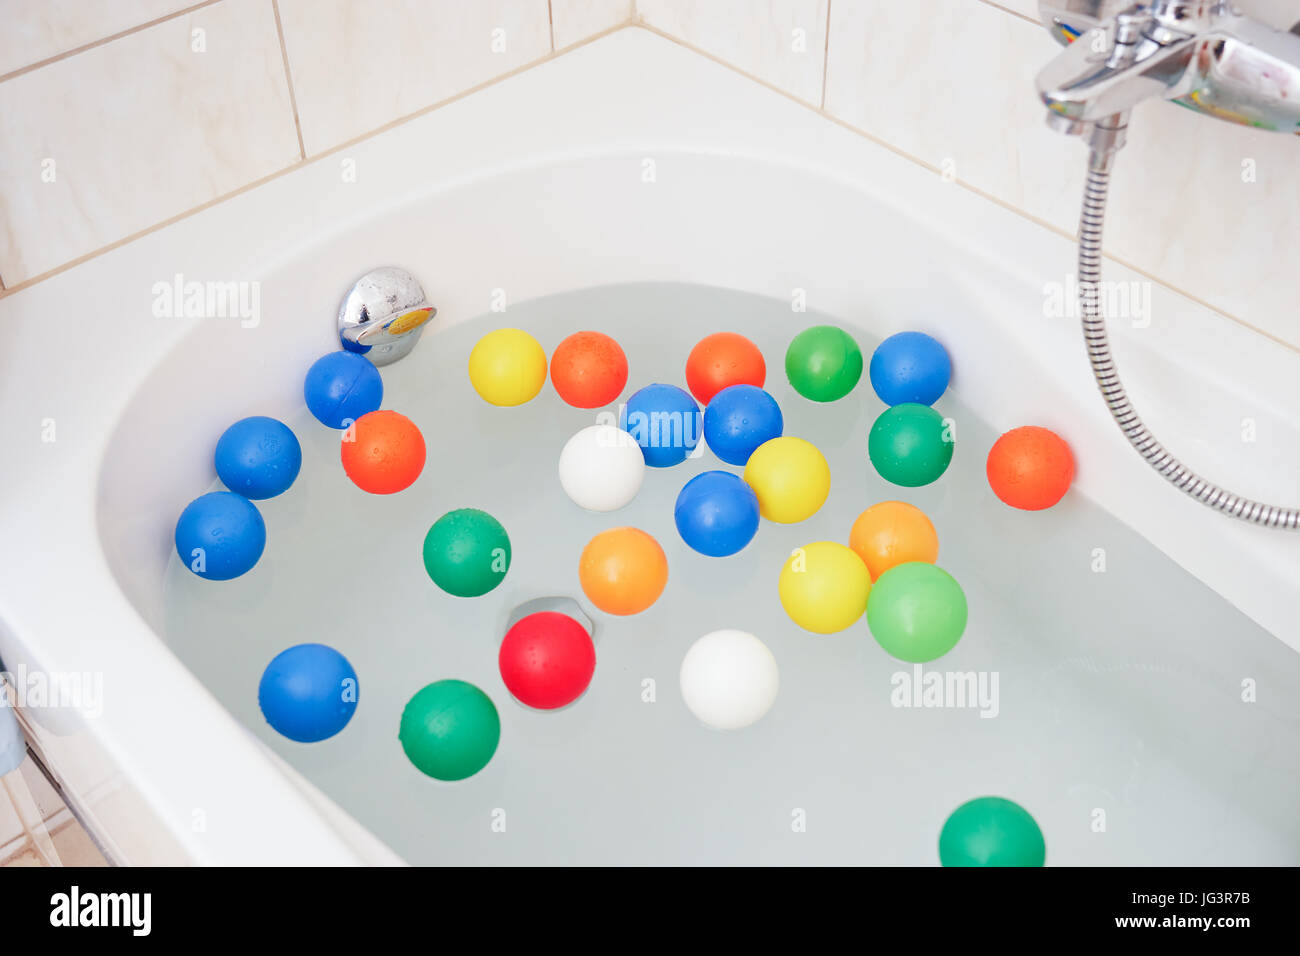 White bathtube with colored plastic balls Stock Photo